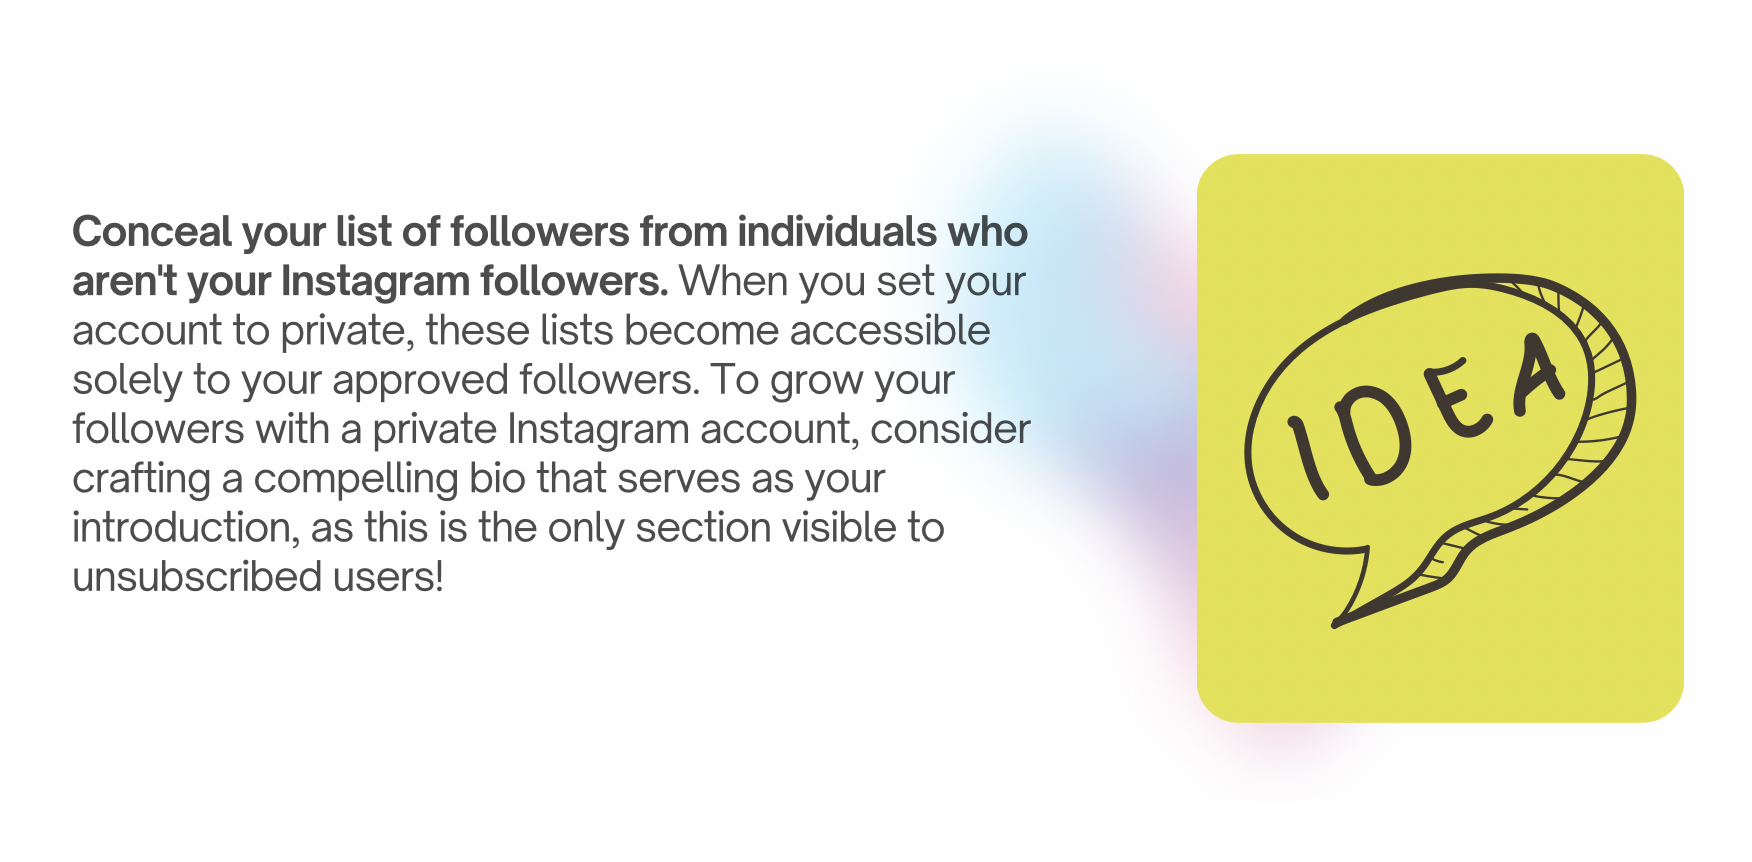 How do I hide my followers list on Instagram?